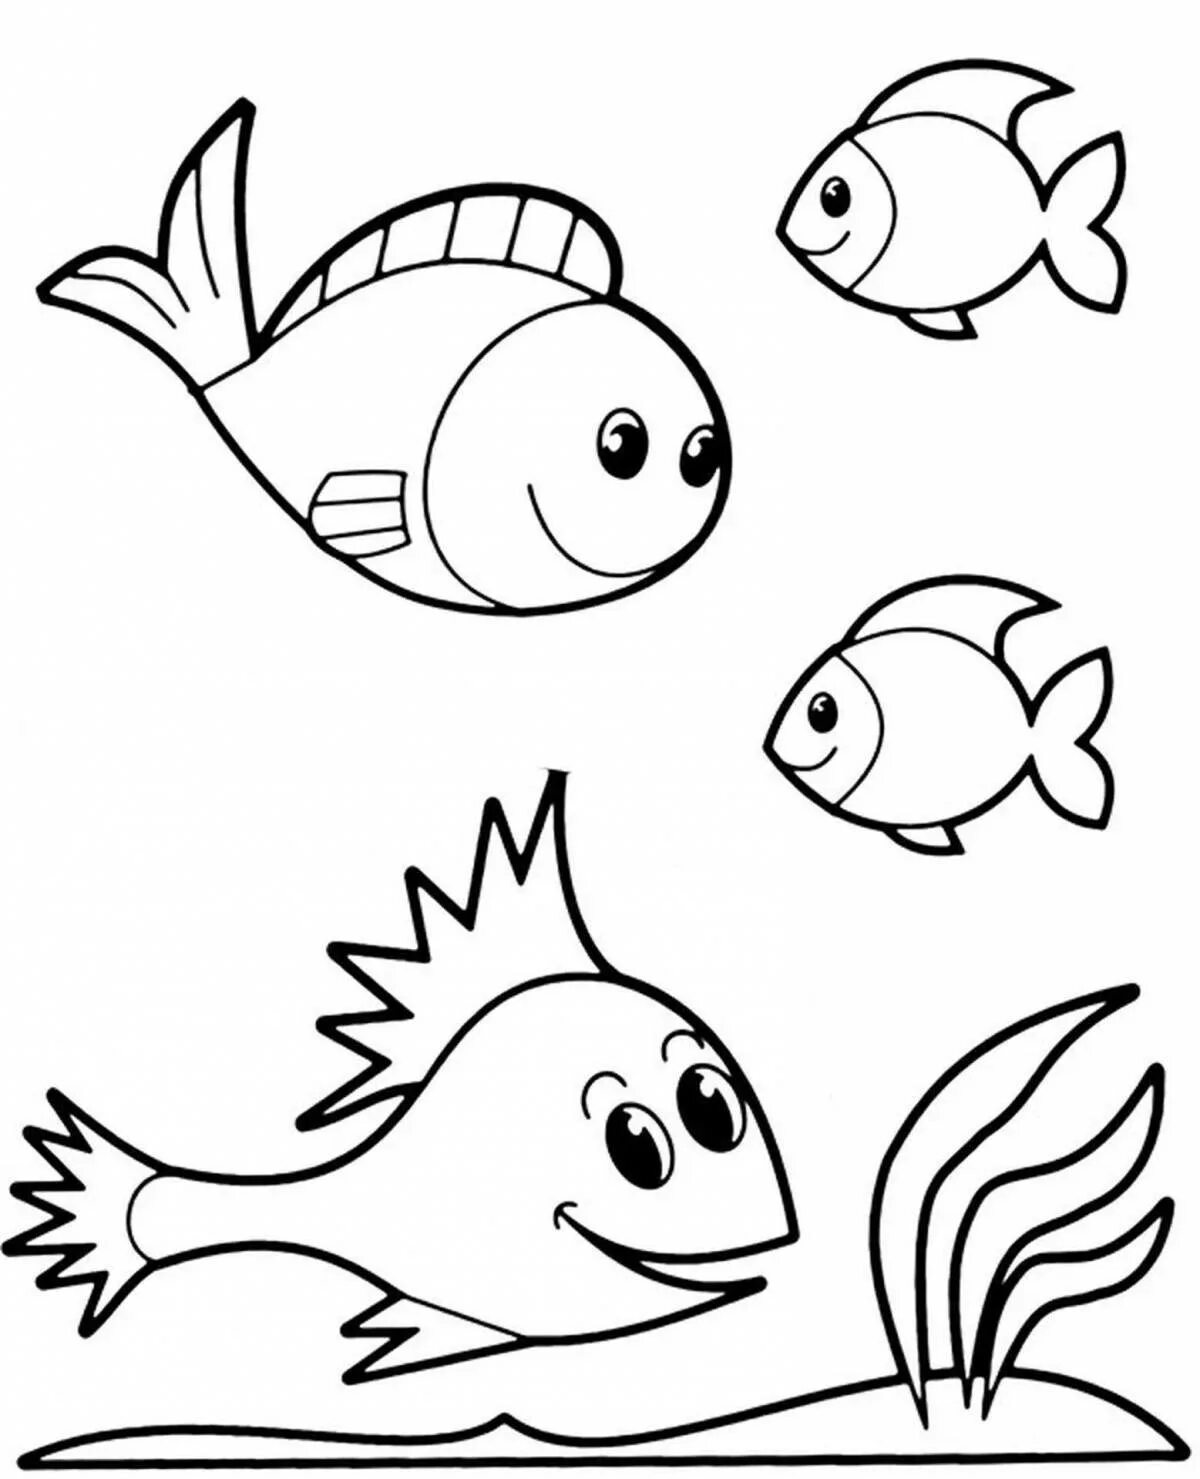 Раскраска рыбы для детей 6 лет. Рыба для раскрашивания для детей. Рыбка раскраска для детей. Рыбка для раскрашивания для детей. Трафарет рыбки для раскрашивания.